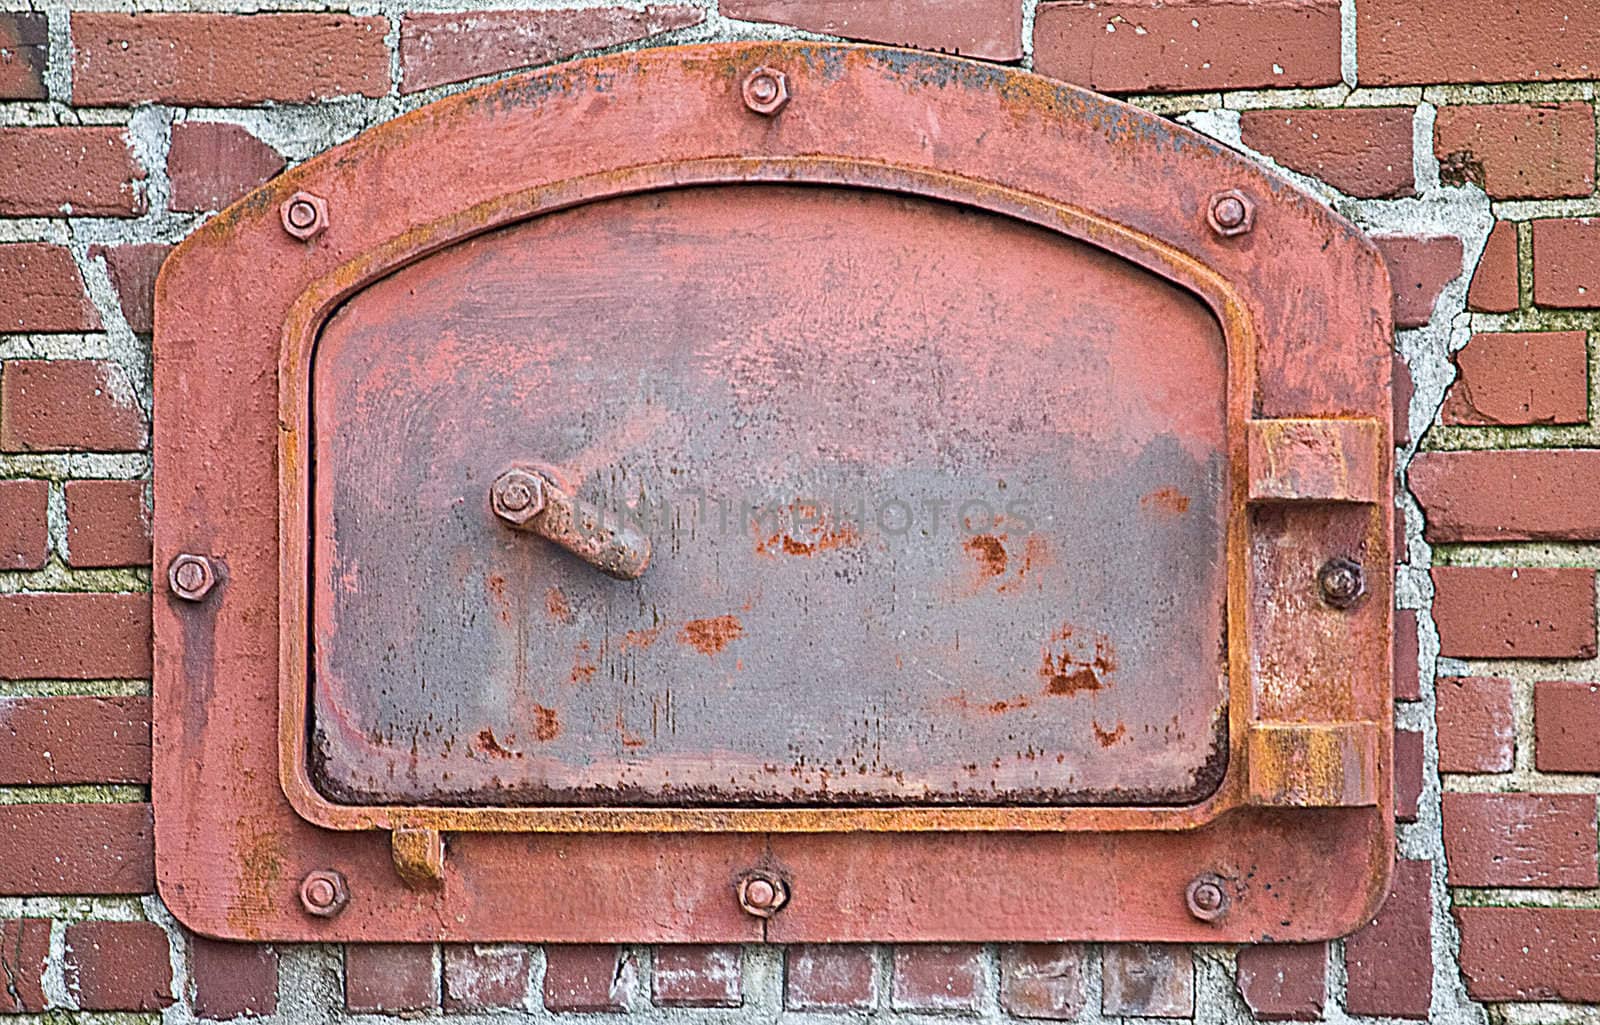 Red Brick Furnance Incinerator Boiler Oven by mwp1969